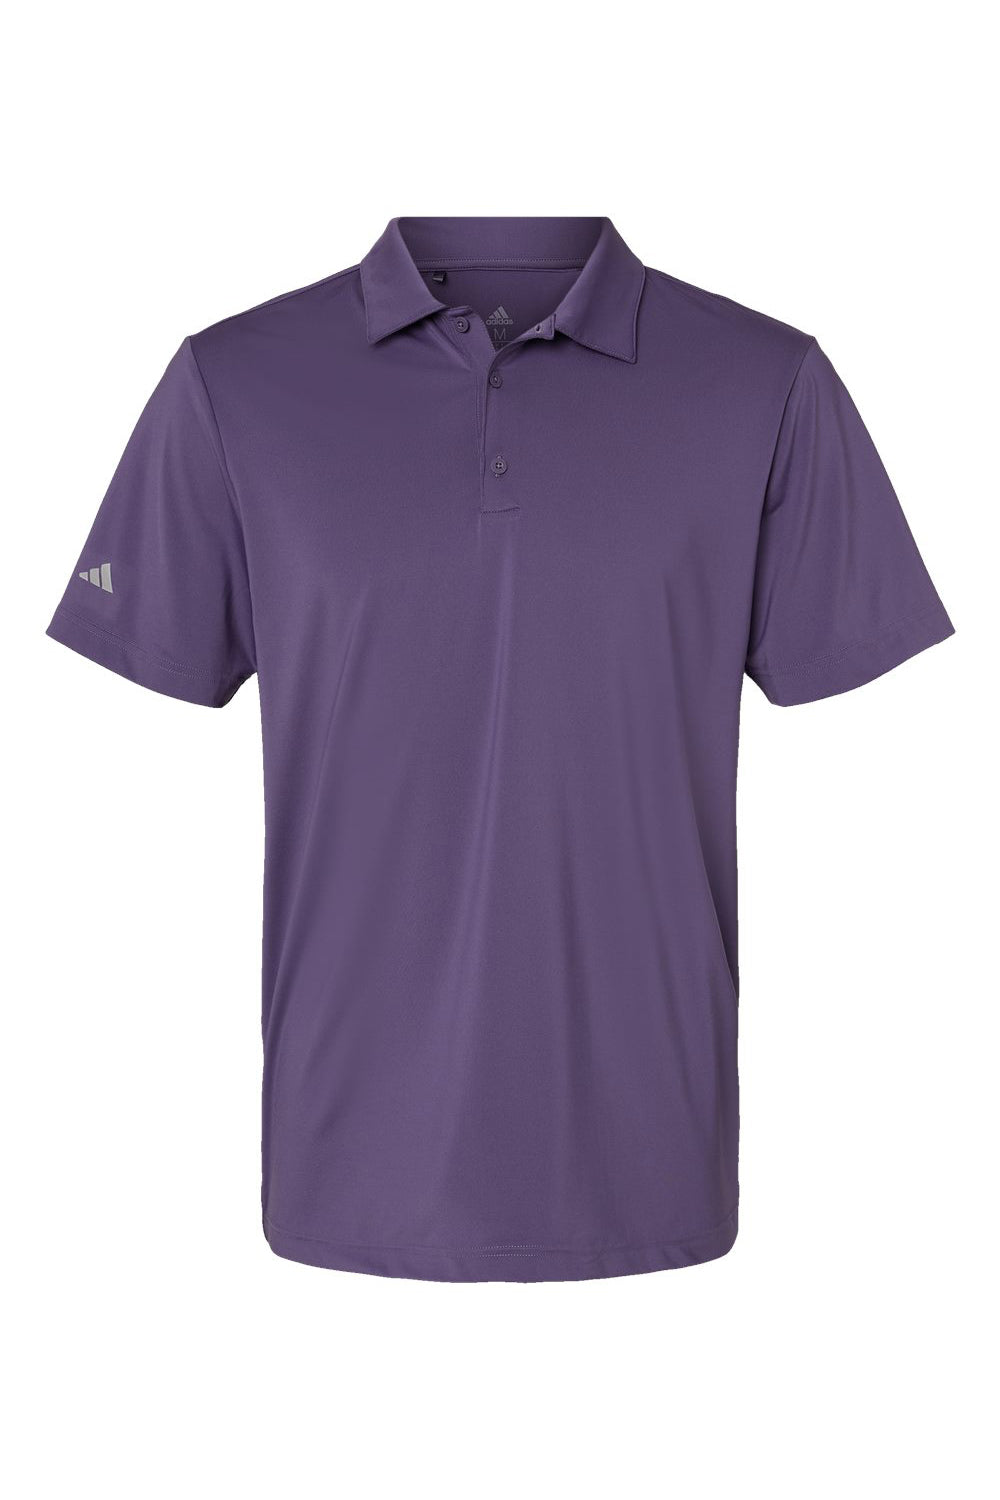 Adidas A514 Mens Ultimate Short Sleeve Polo Shirt Tech Purple Flat Front